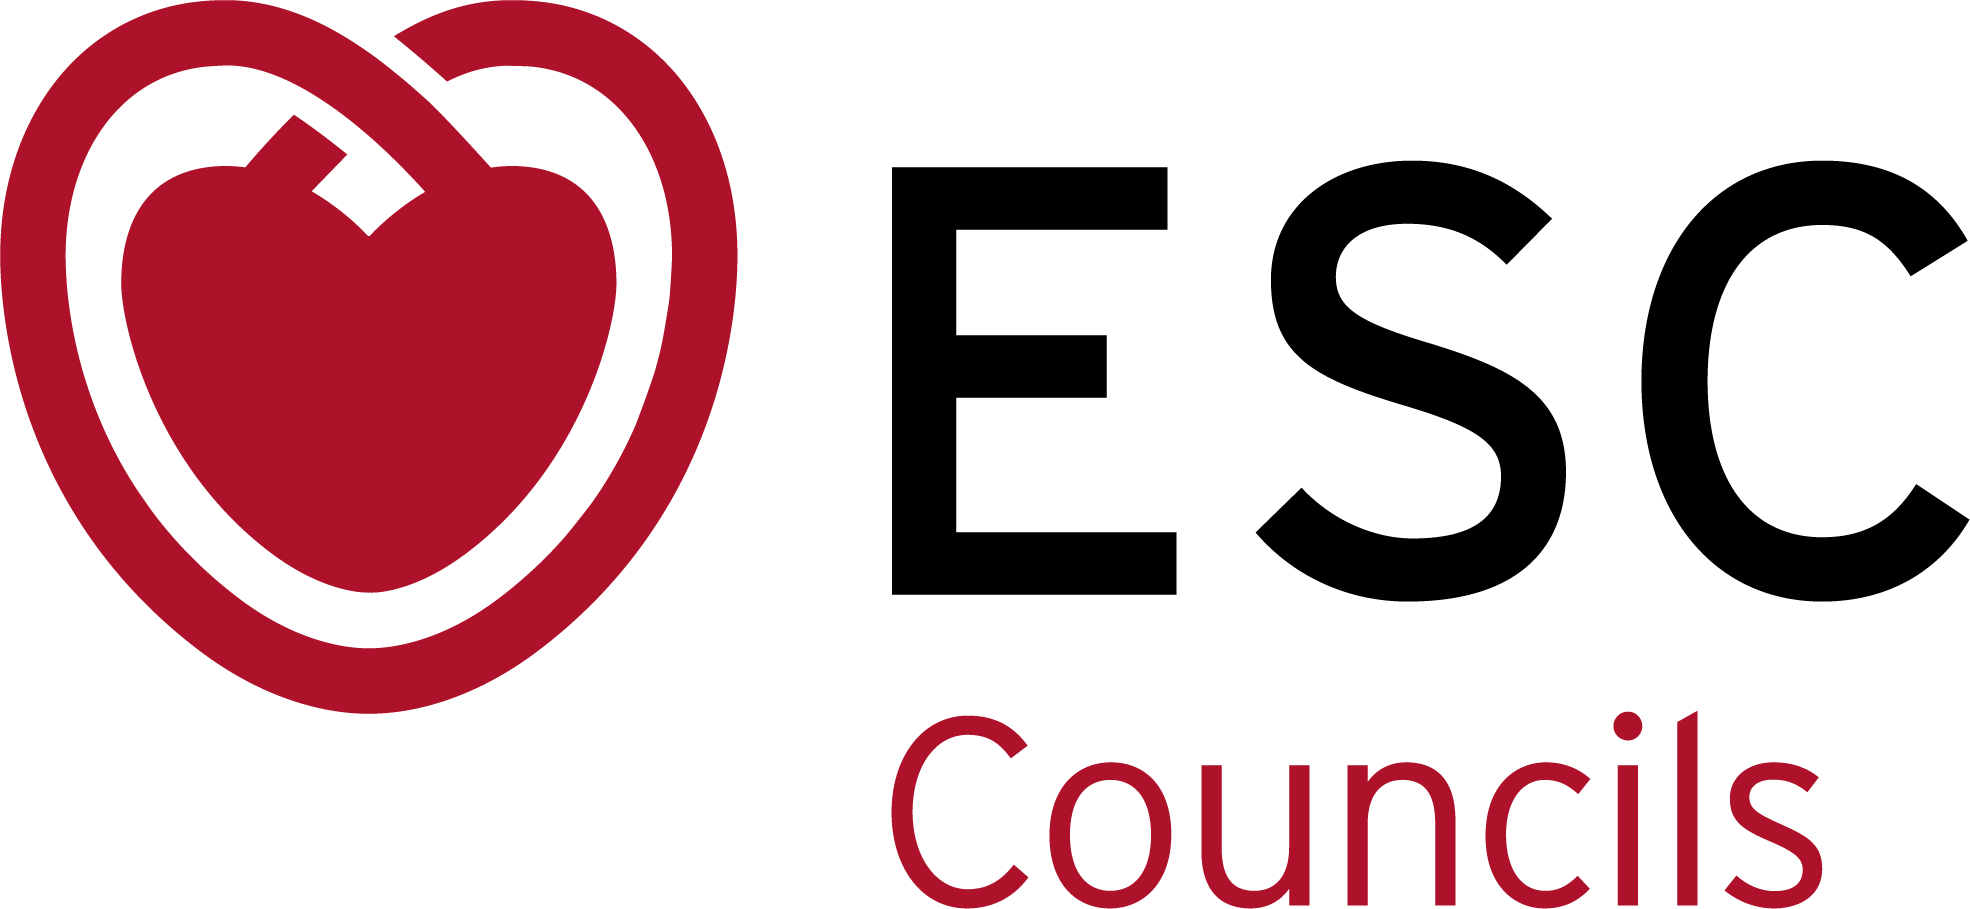 European society. ESC логотип. Европейское кардиологическое общество. Европейское сообщество кардиологов. Европейская Ассоциация кардиологов.